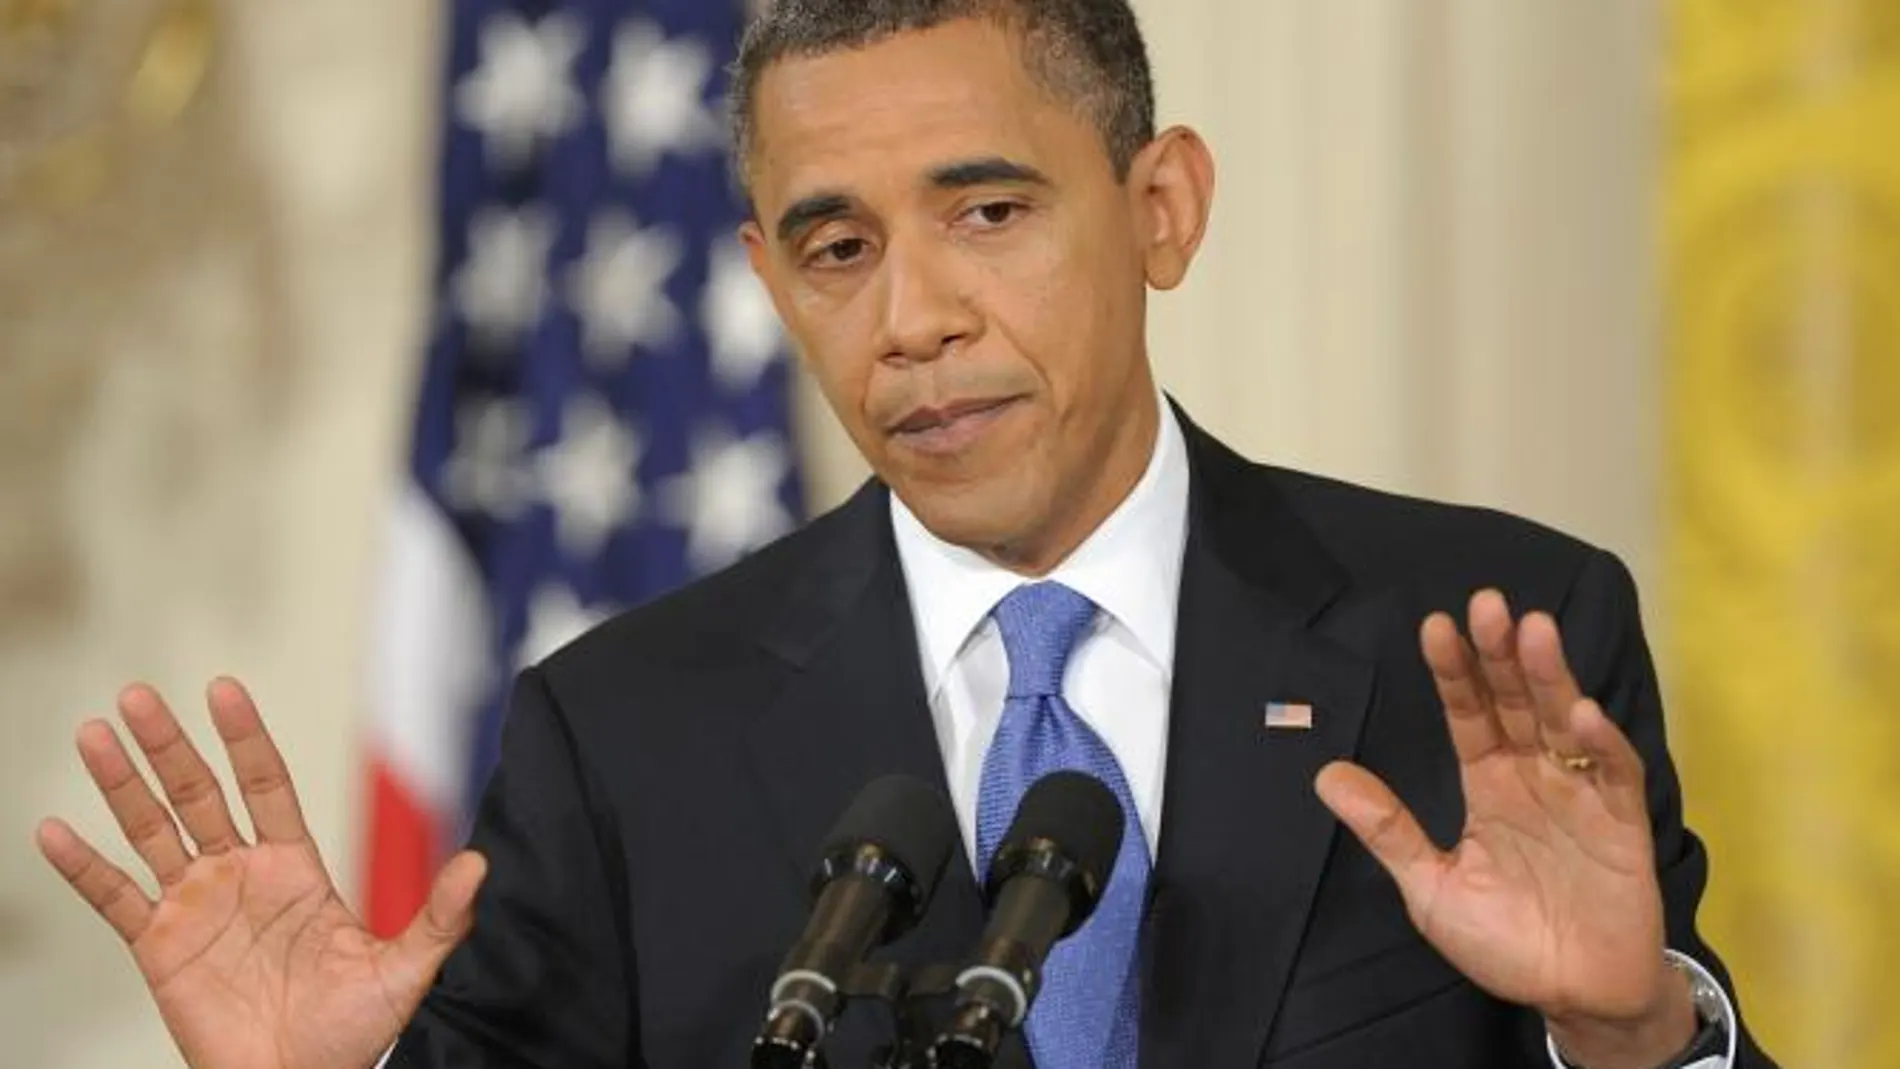 Obama anunciará hoy la retirada completa de Irak para fin de año